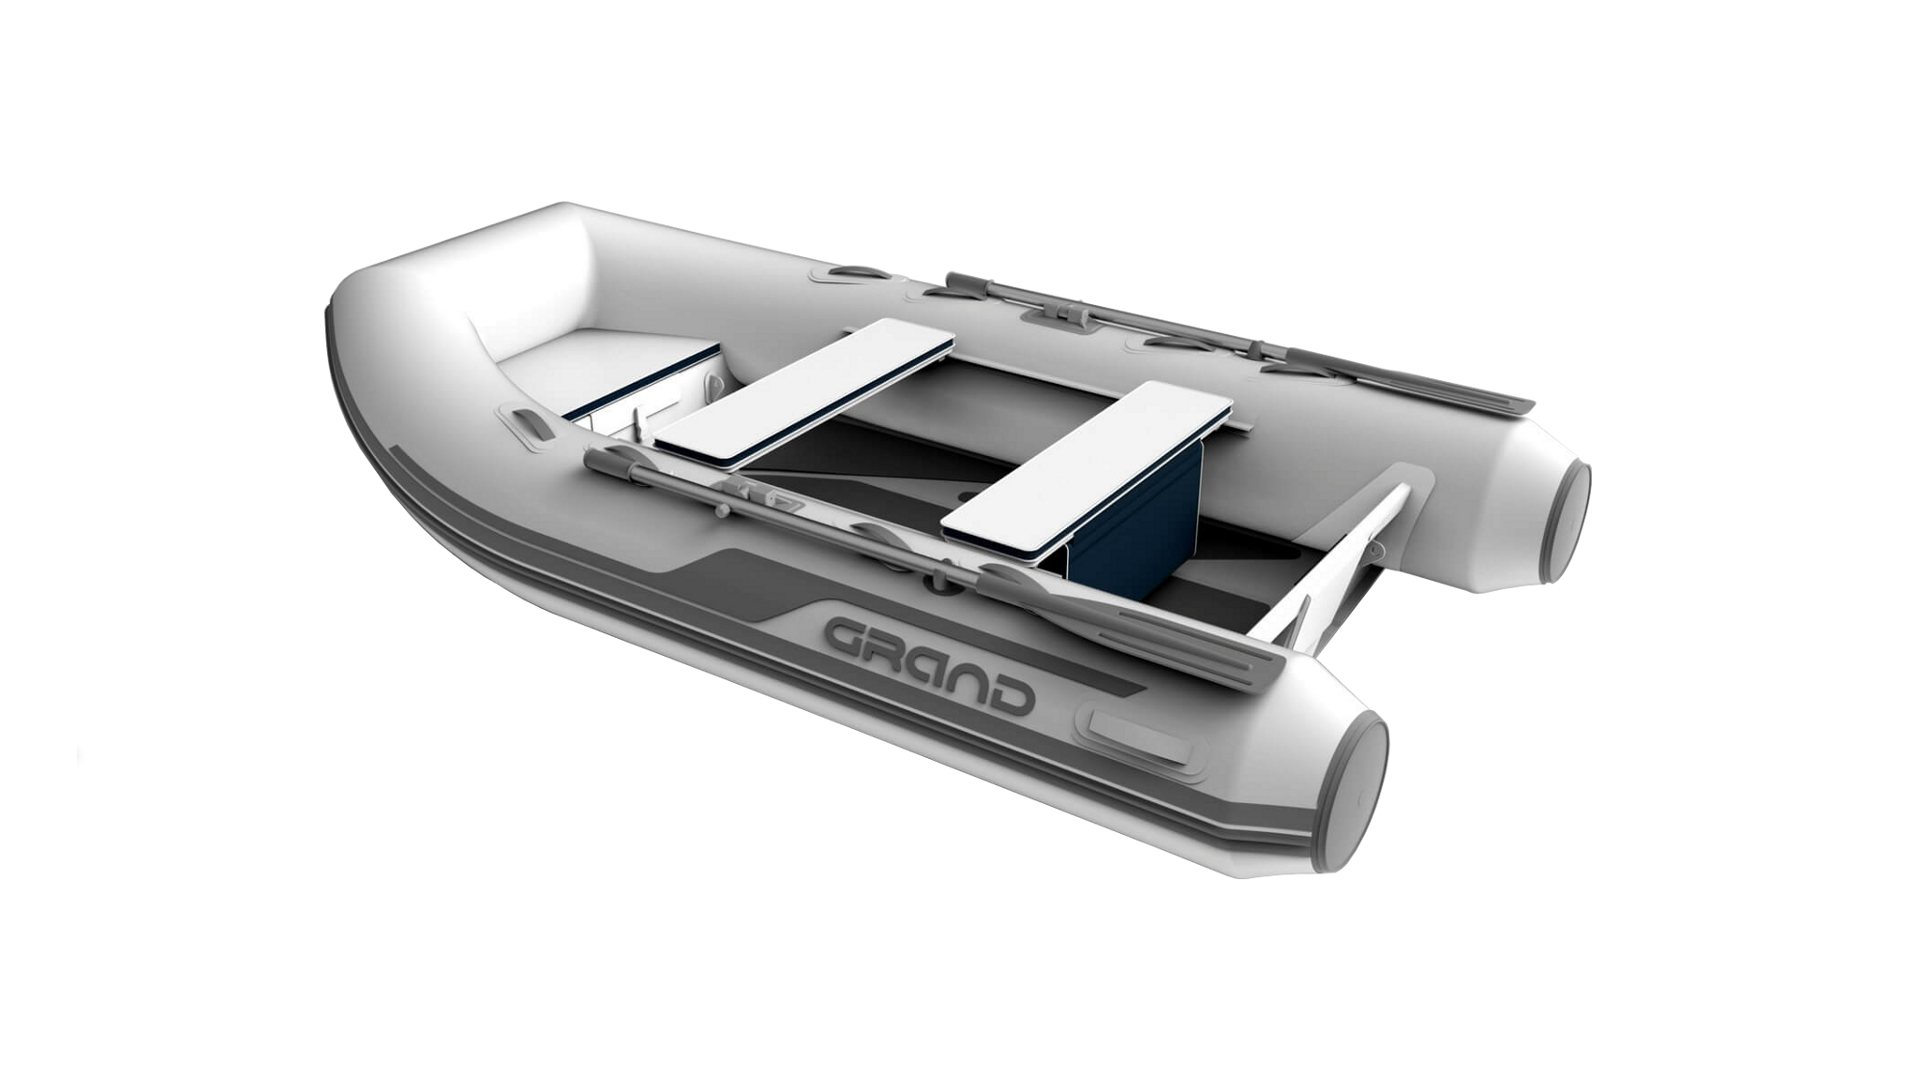 Надувная лодка с жестким алюминиевым дном GRAND Aluminum Line Alu300D, Надувная лодка GRAND Aluminum Line Alu300D, GRAND Aluminum Line Alu300D, GRAND Alu300D, GRAND Alu300D, Надувная лодка GRAND, Надувная лодка ГРАНД, Надувная лодка с жестким дном, RIB, Rigid Inflatable Boats